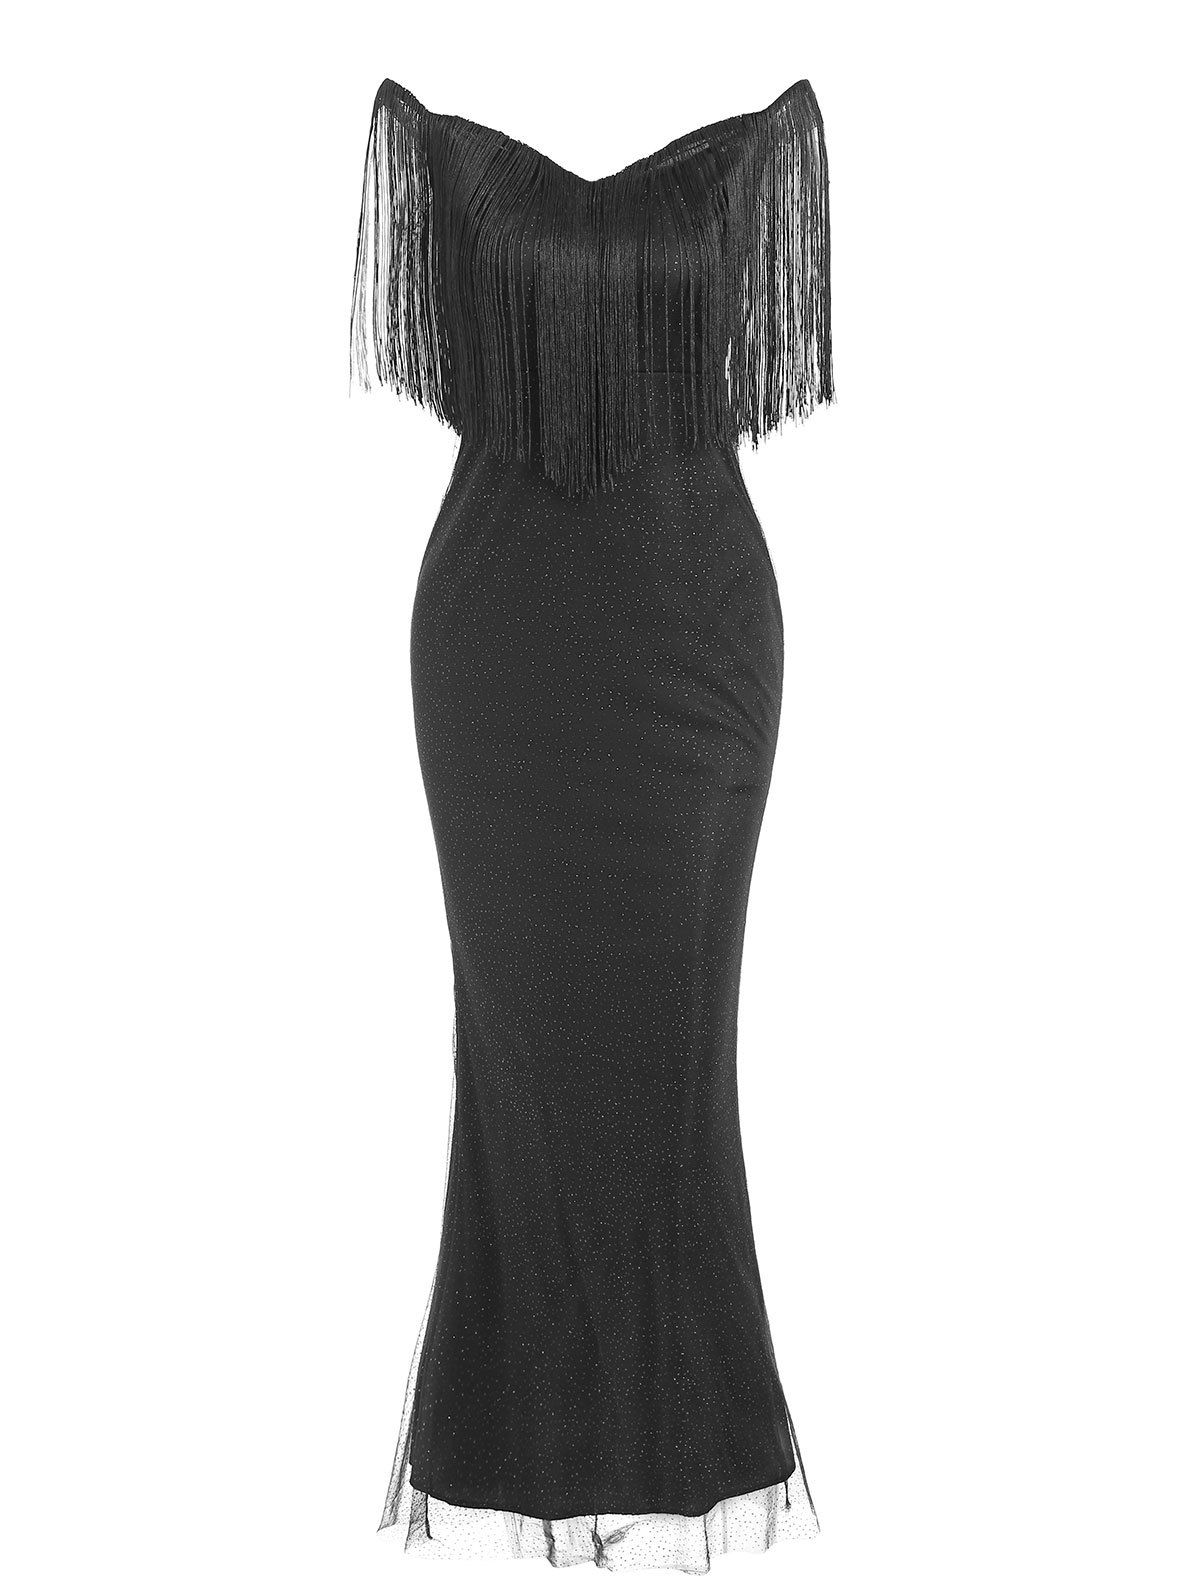 Fringed Glitter Mesh Overlay Off The Shoulder Evening Dress - BLACK S